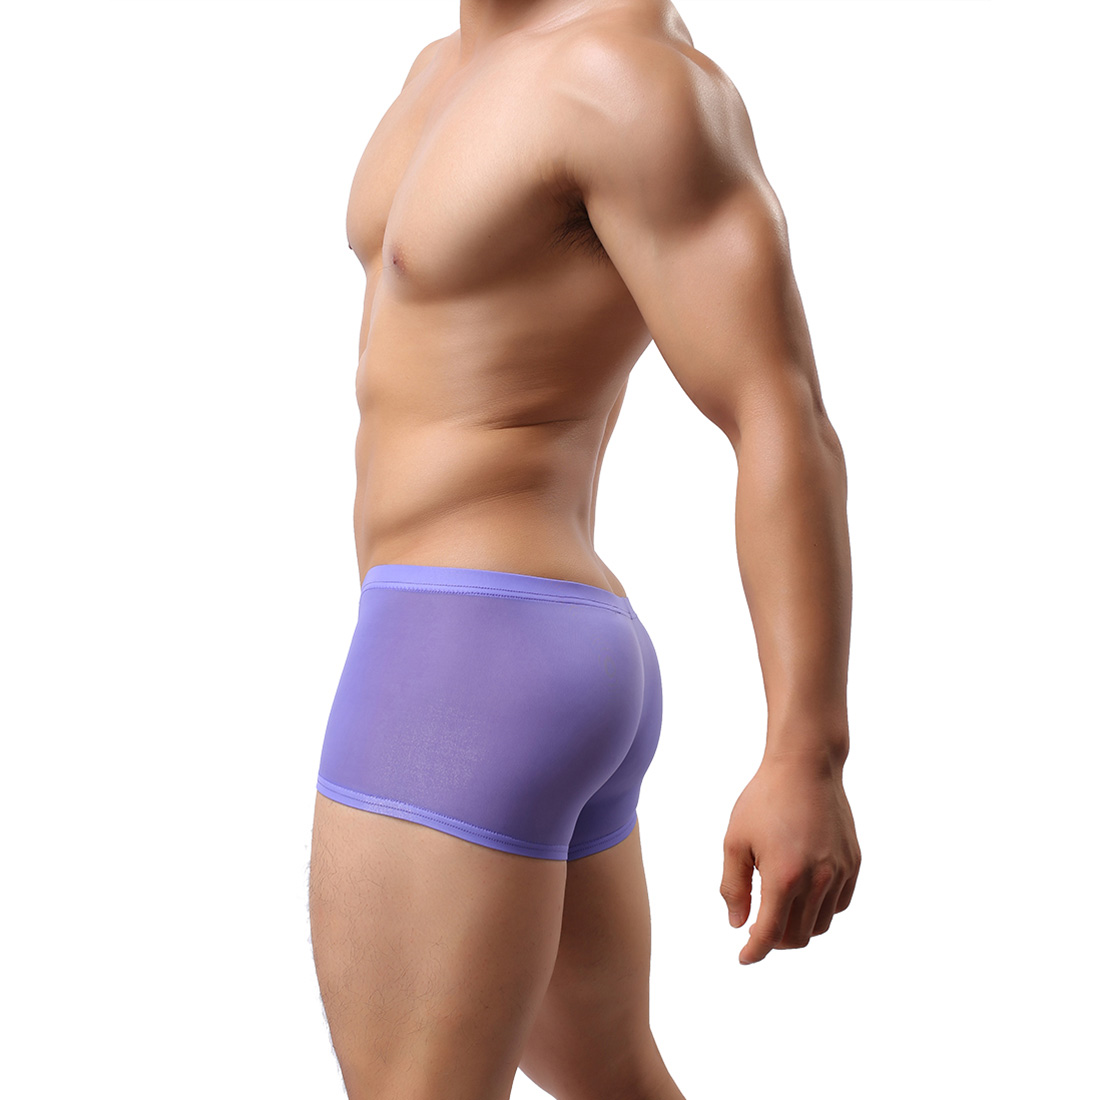 Men's Sexy Lingerie Underwear See-through Boxer Shorts Underpants WH42 Purple XL